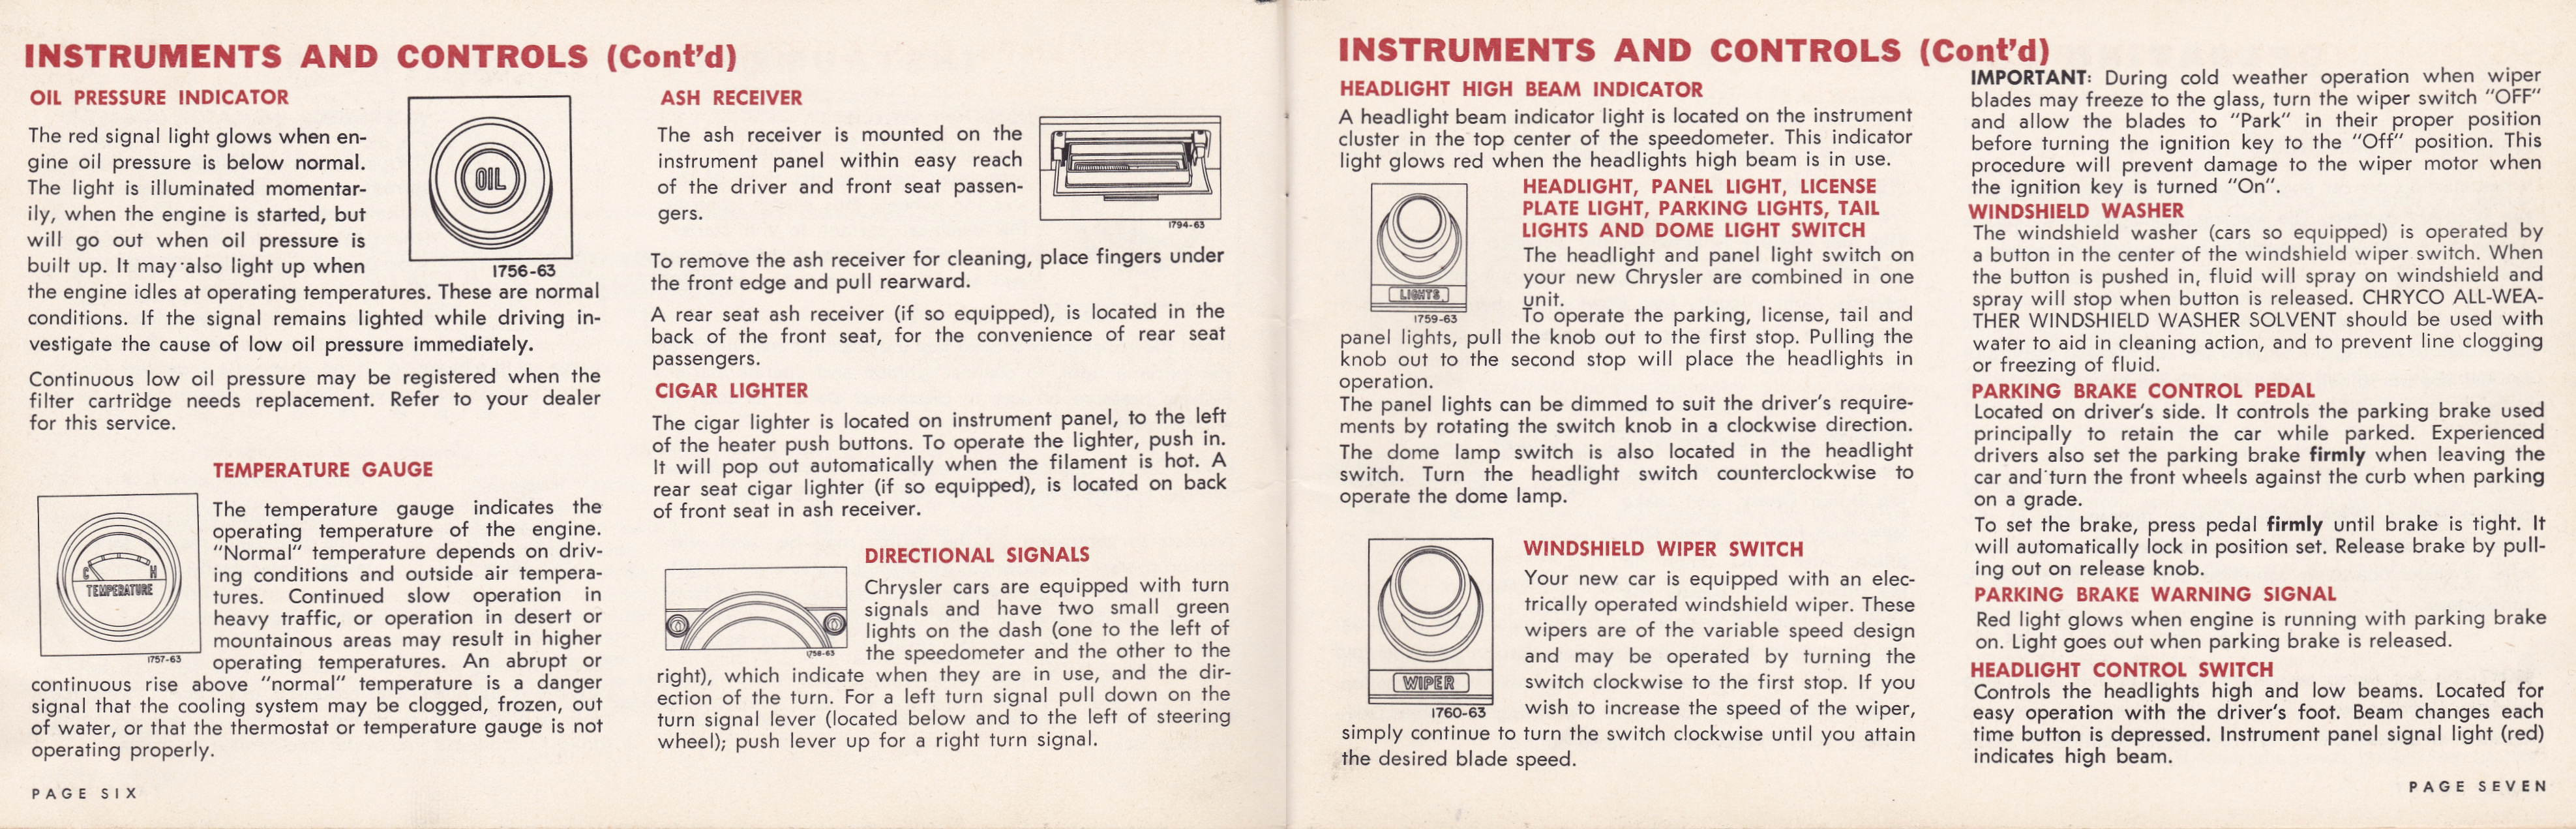 1964_Chrysler_Owners_Manual_Cdn-06-07